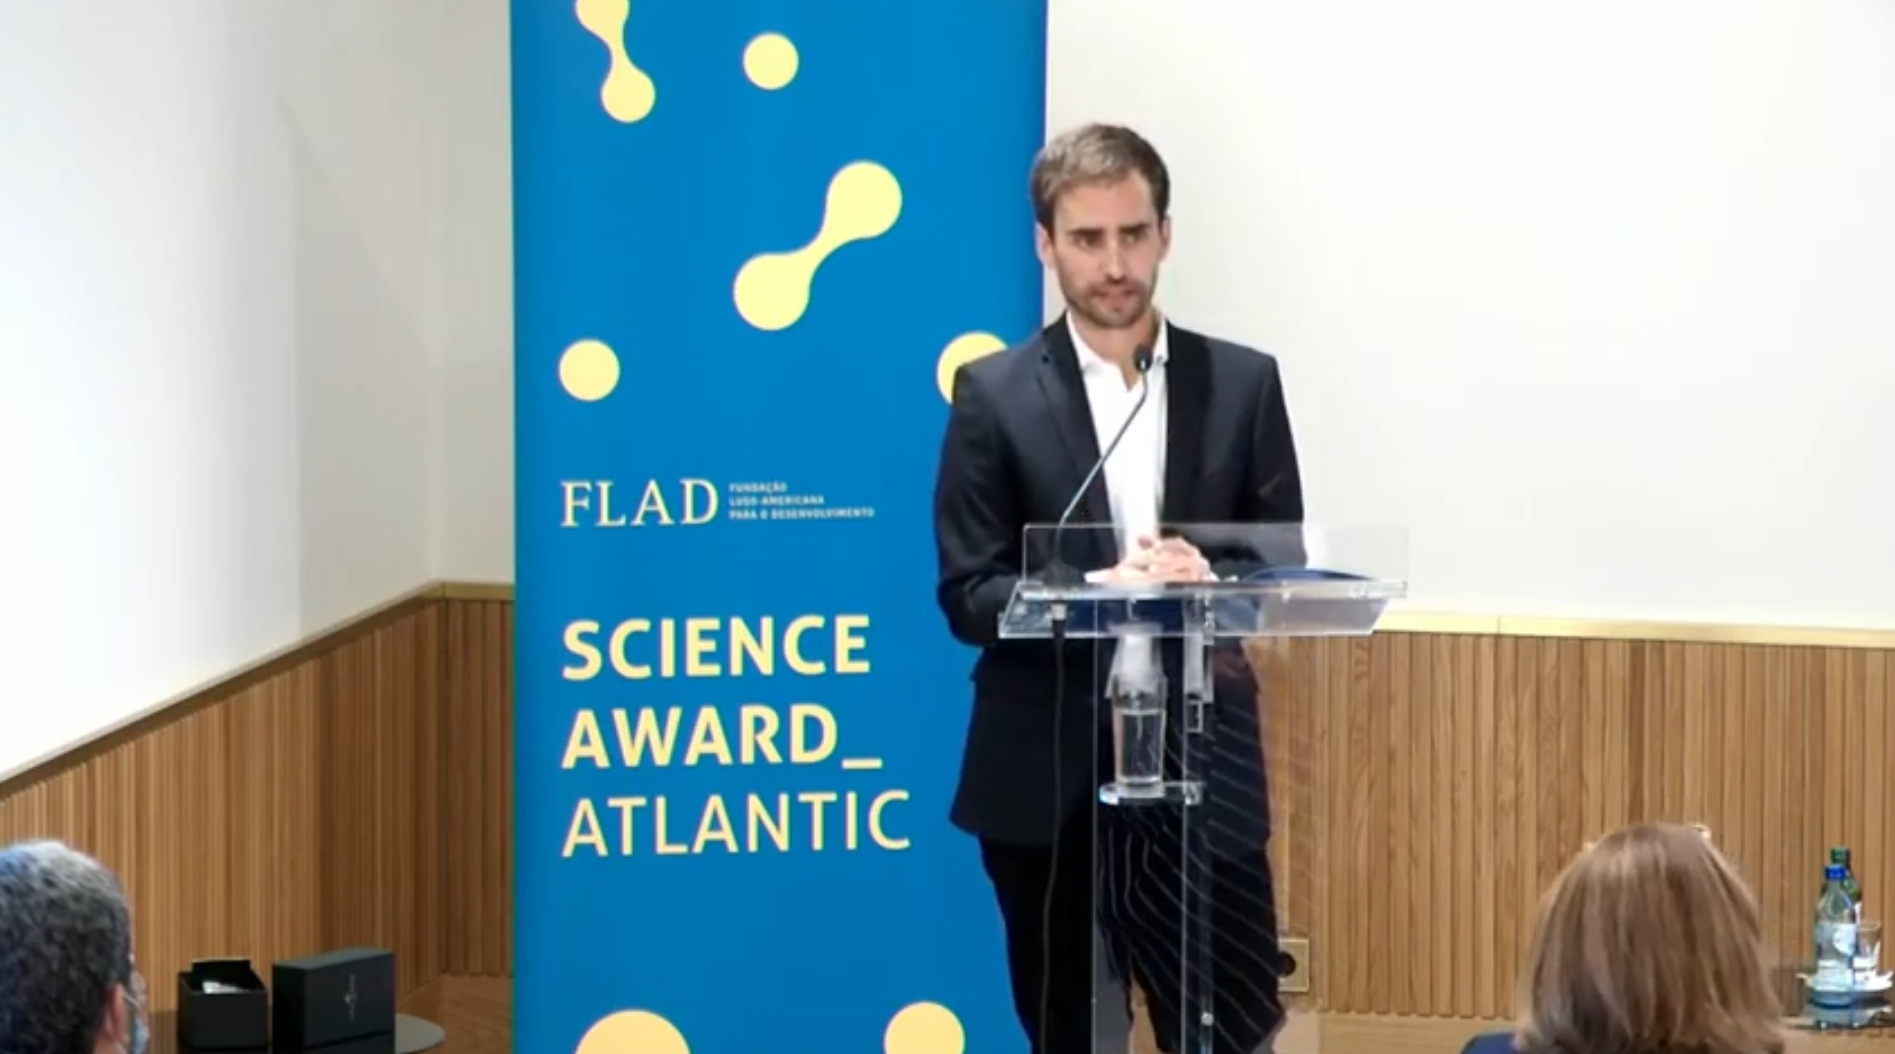 FLAD Science Award Atlantic 2021